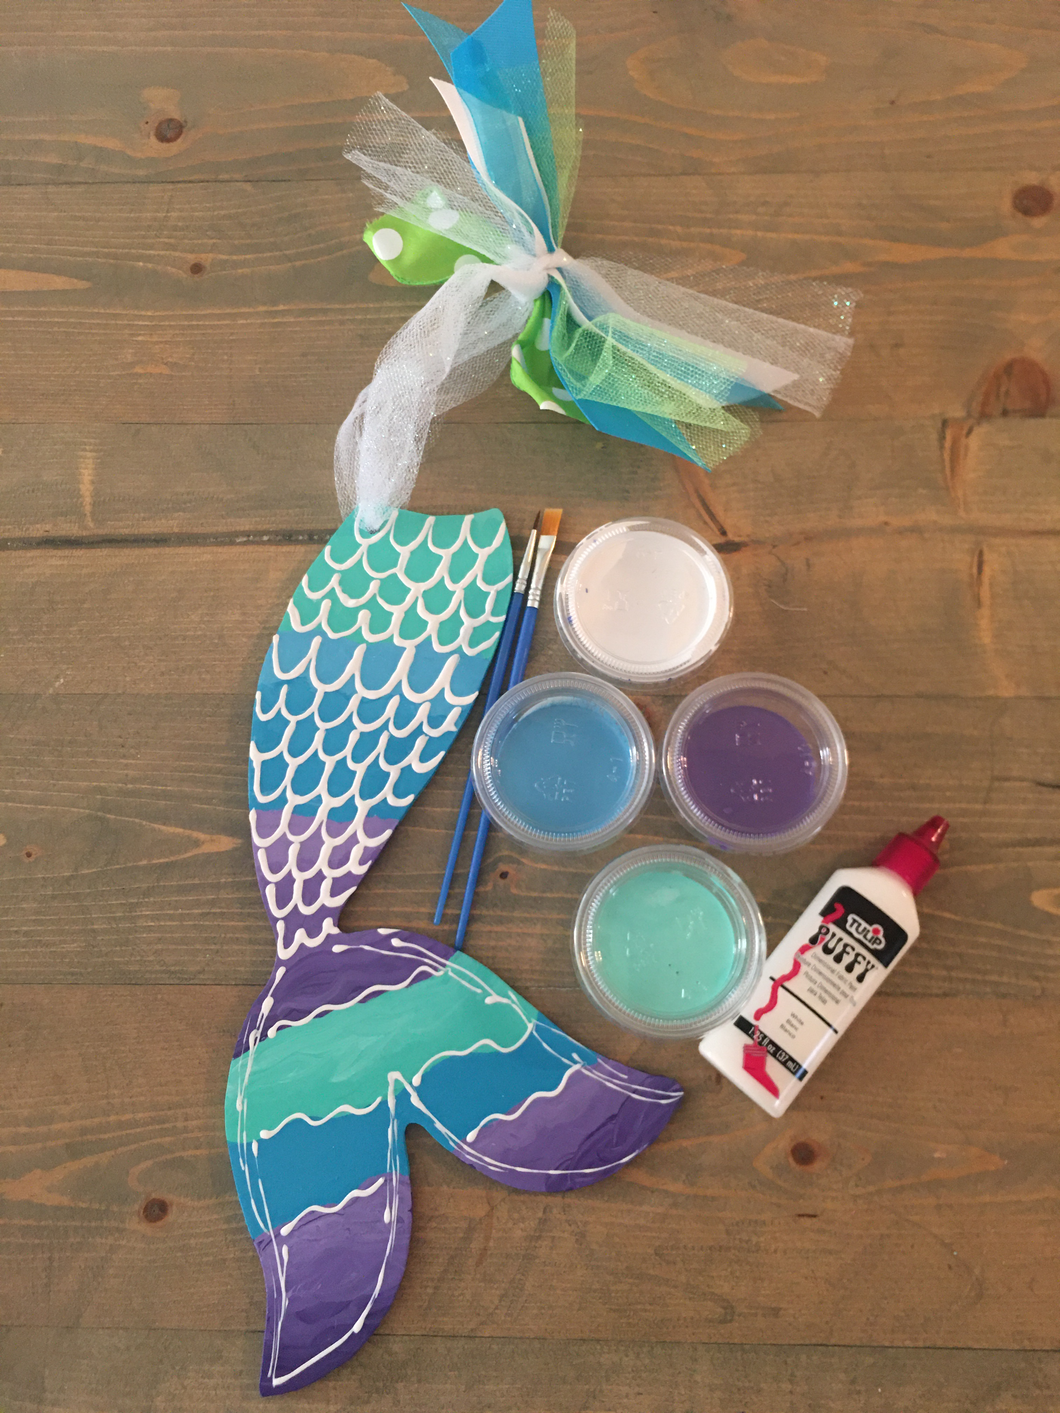 Mermaid Tail Paint Kit